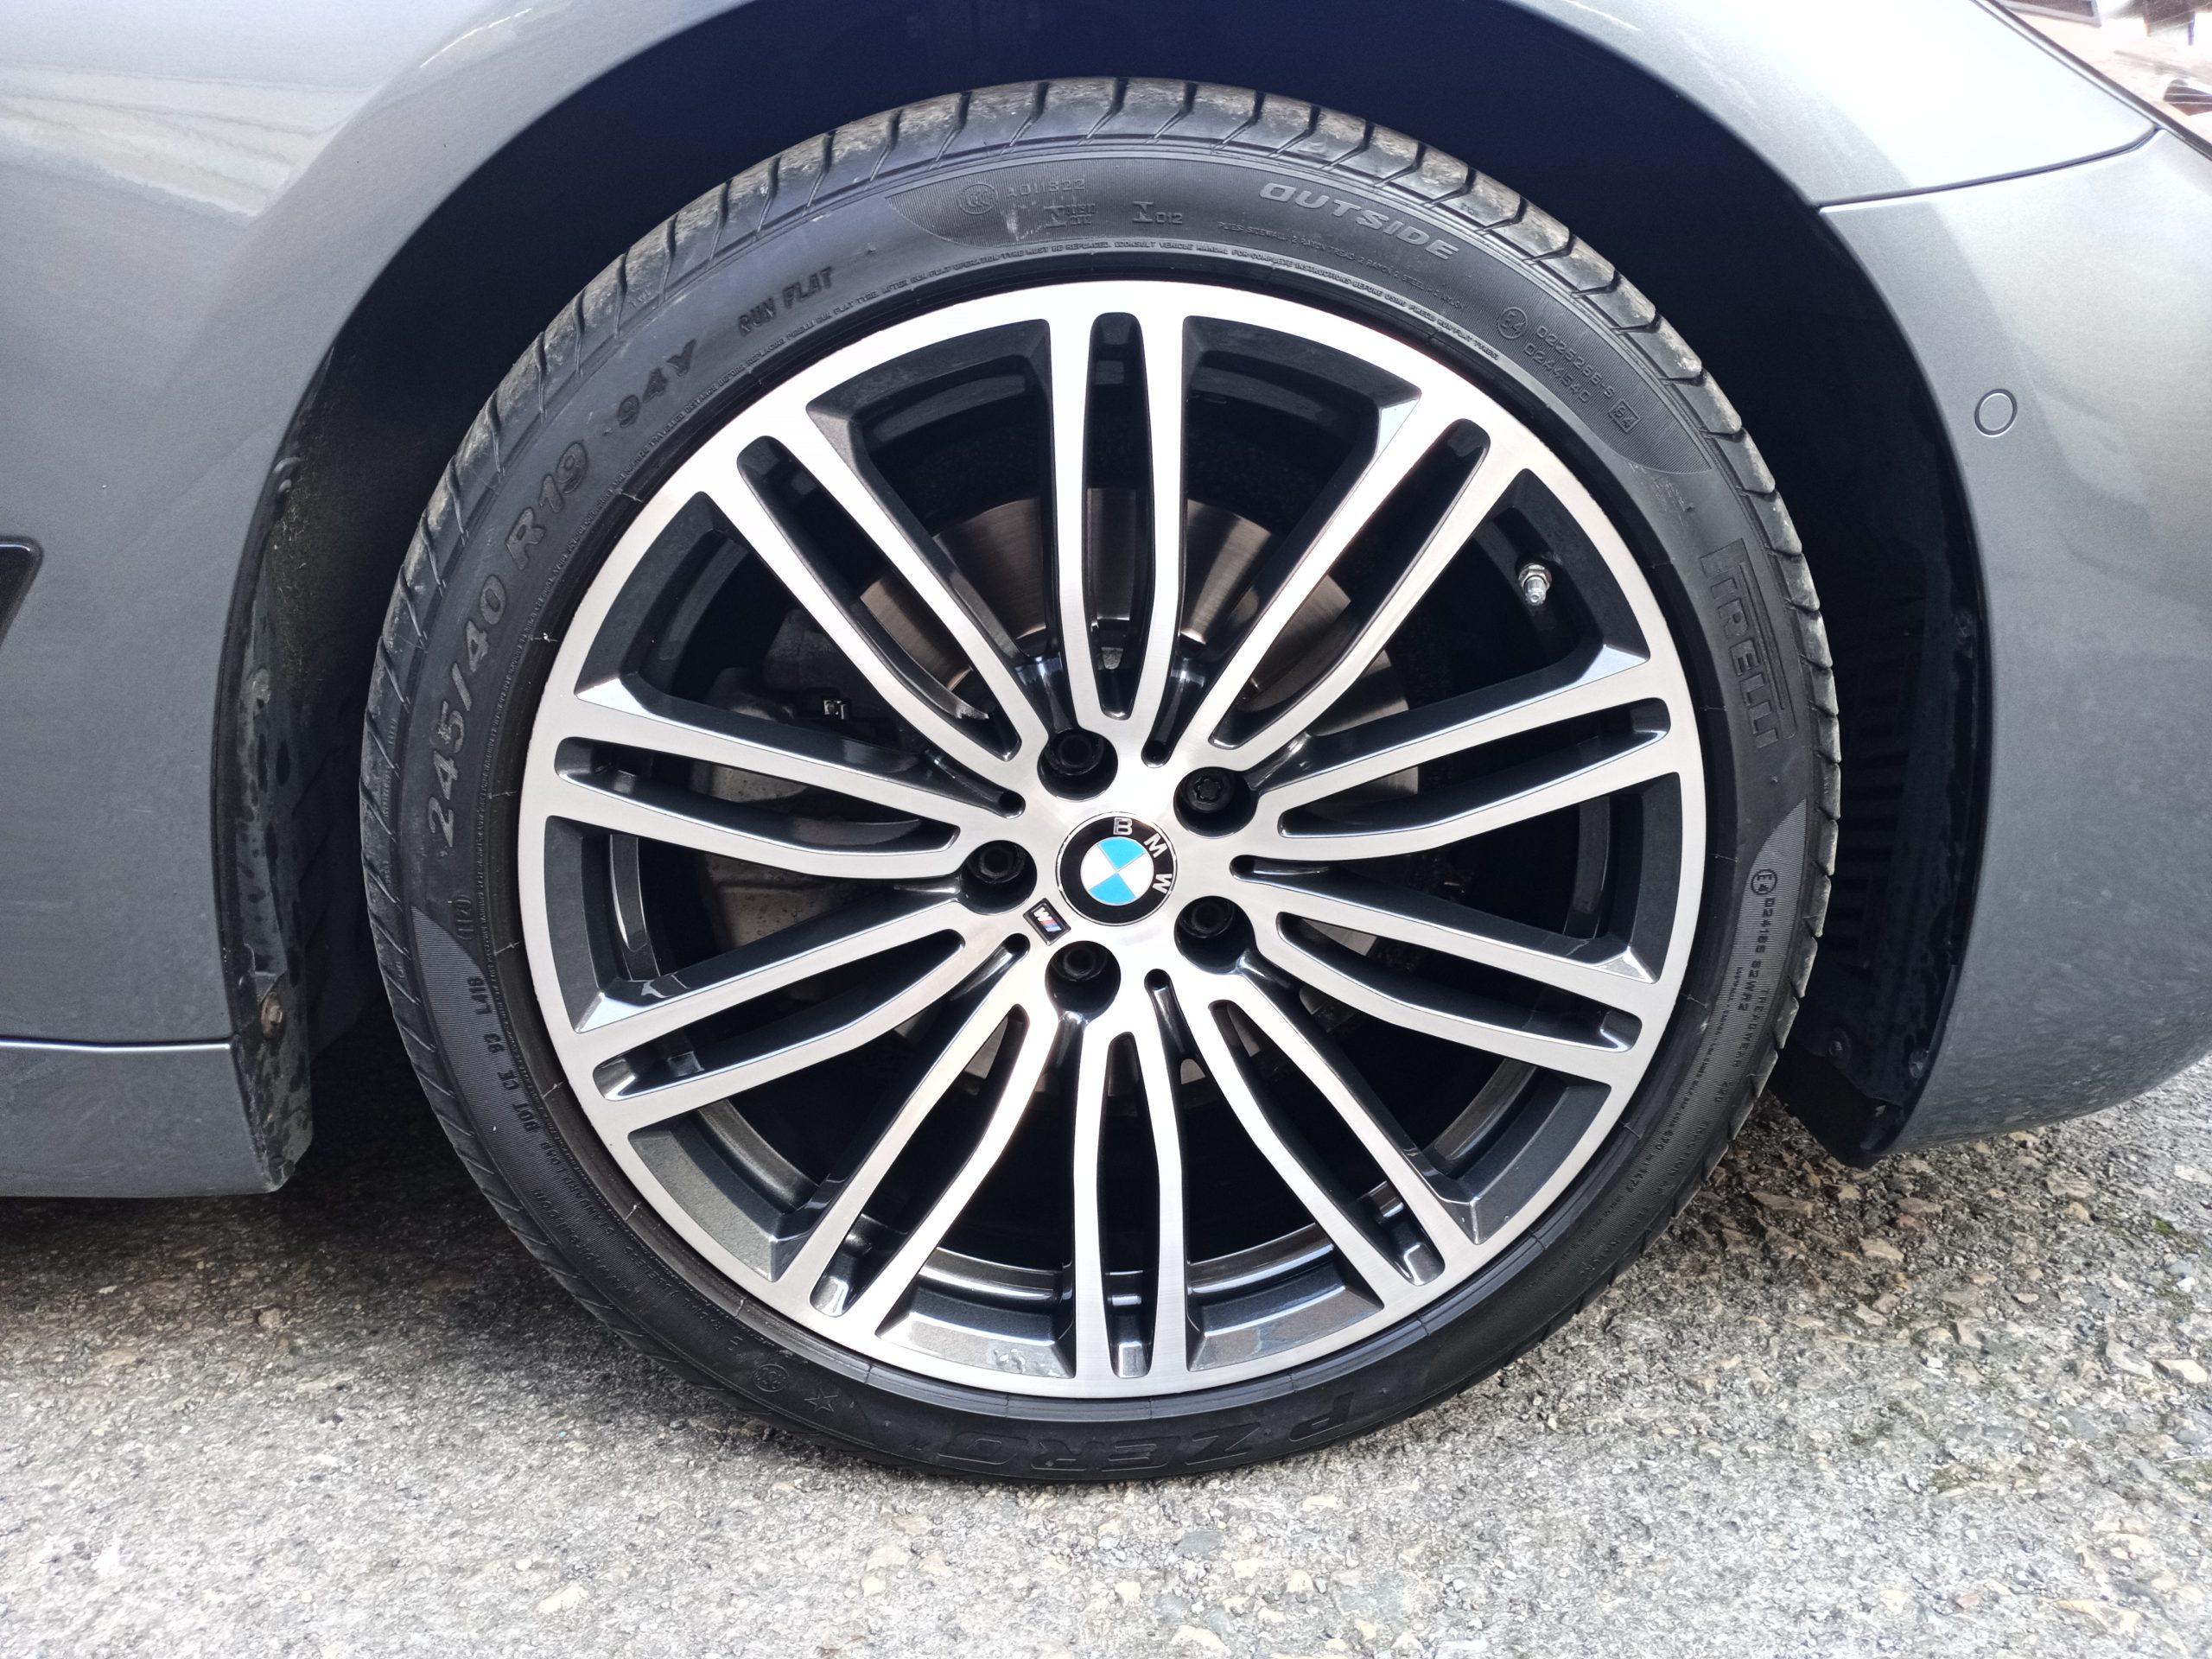 BMW diamond cut alloy wheel repair wakefield after